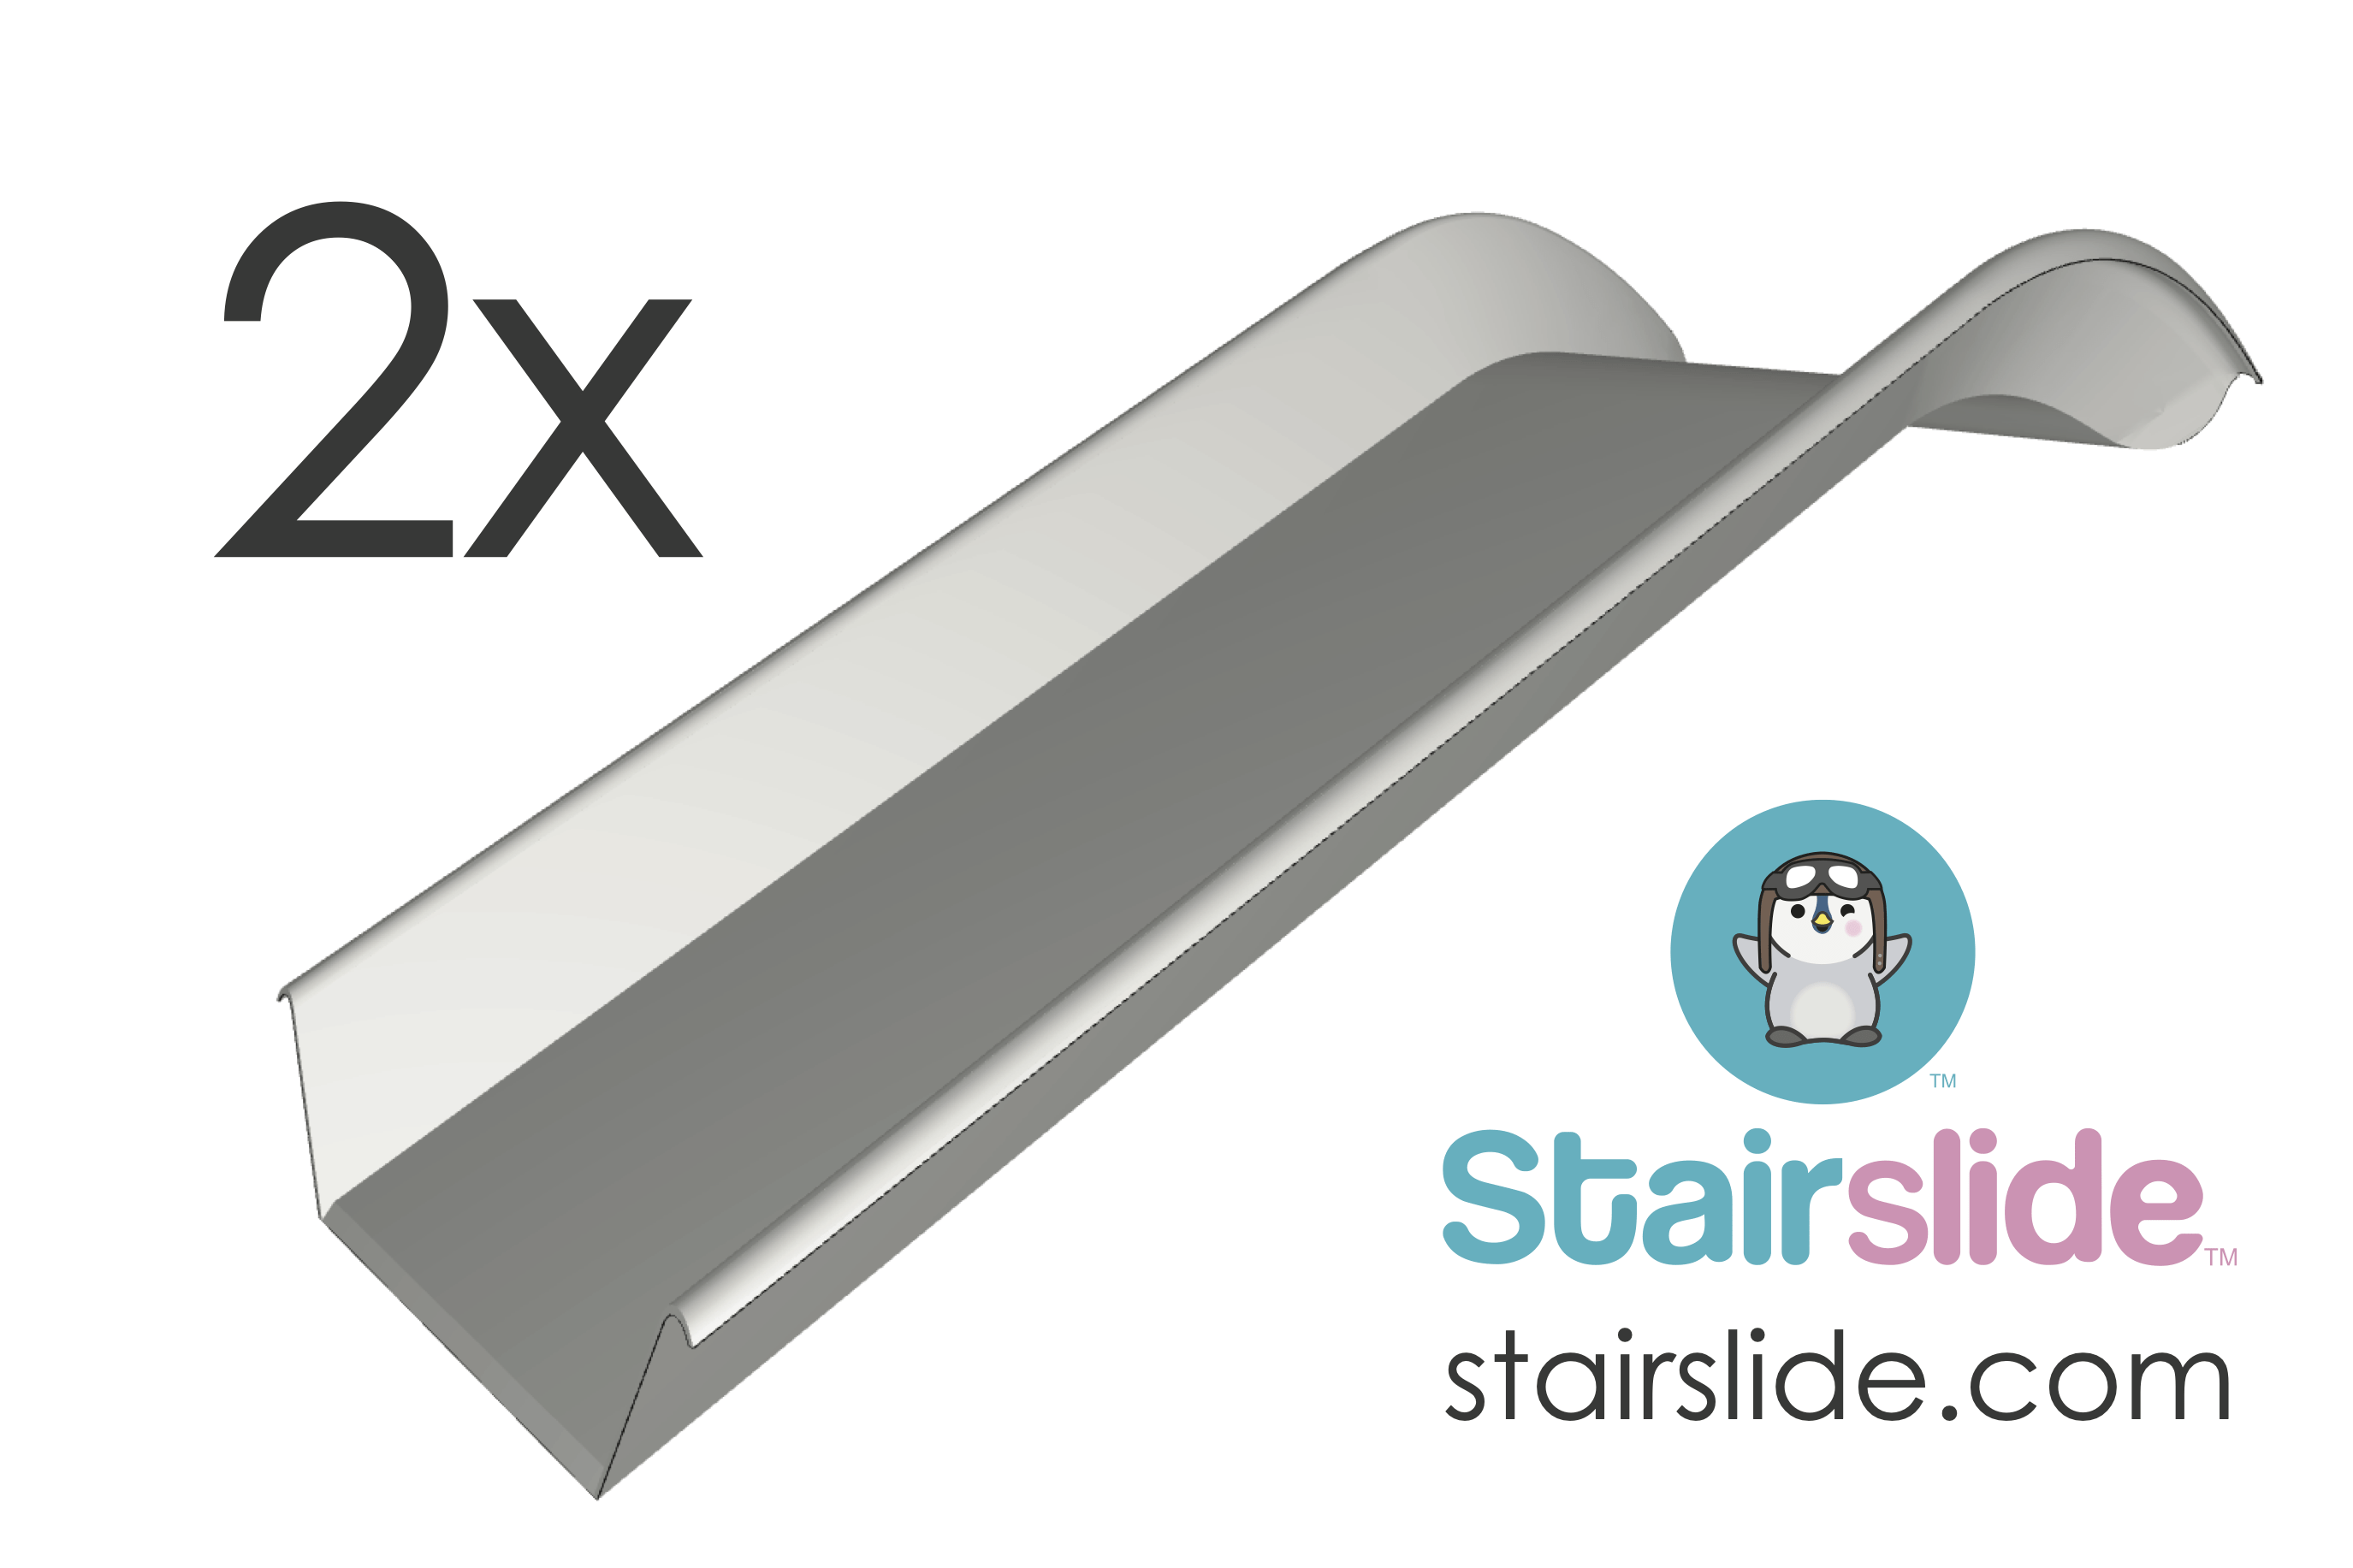 StairSlide - The OFFICIAL StairSlide Website